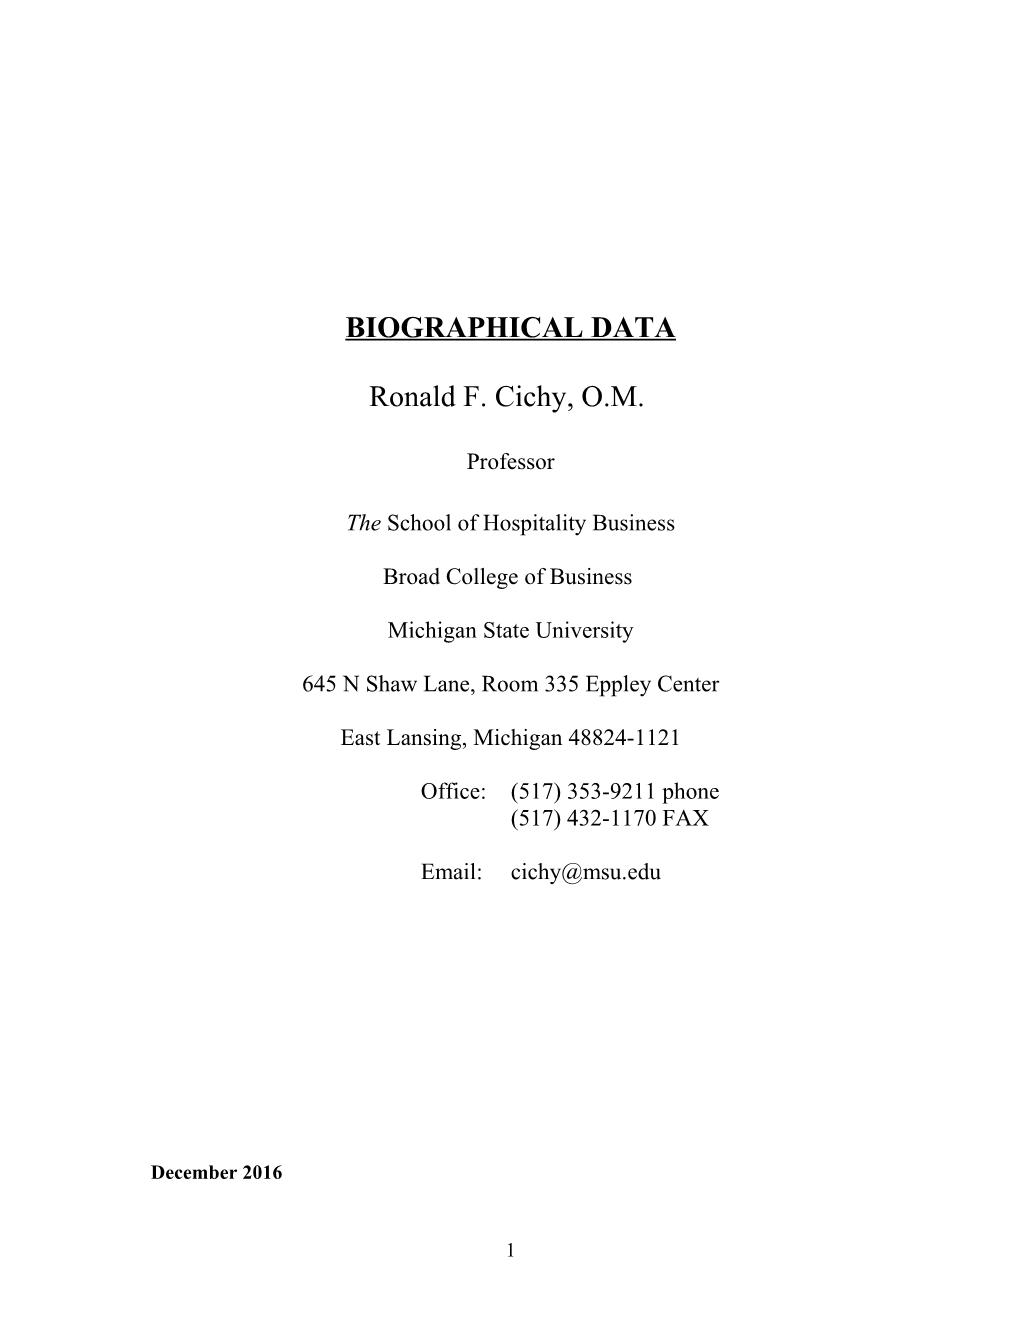 Biographical Data